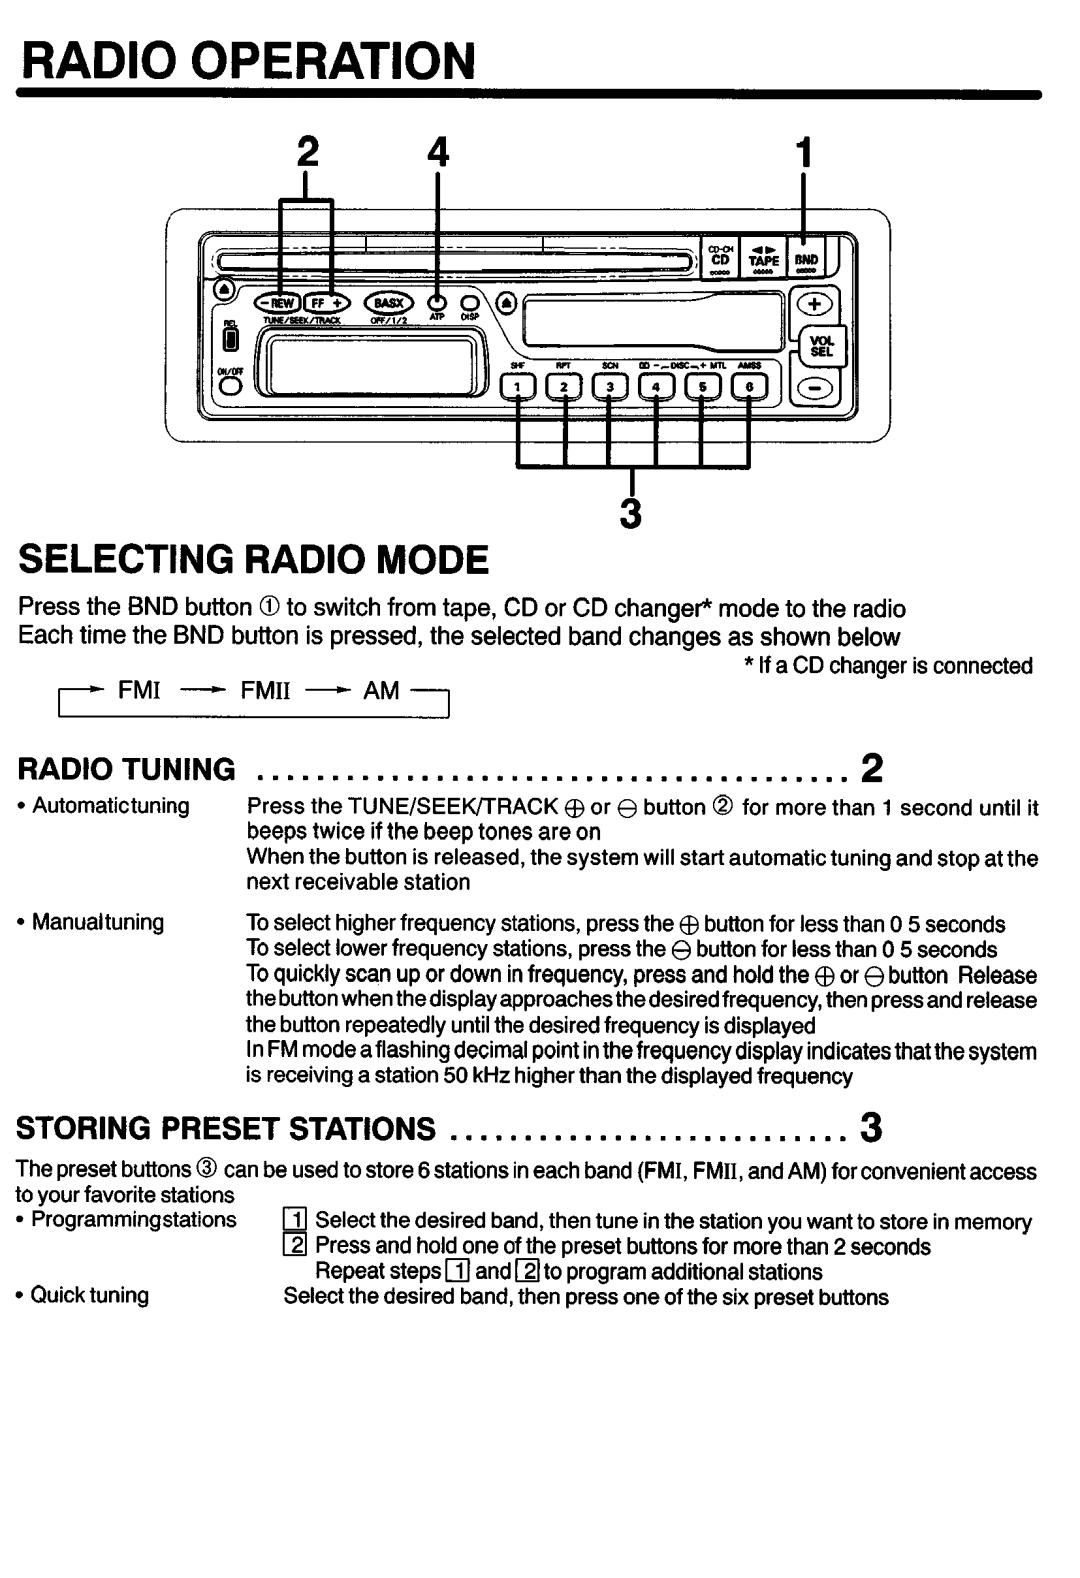 Sanyo FXCD-500 manual Radio Operation, Selecting Radio Mode 